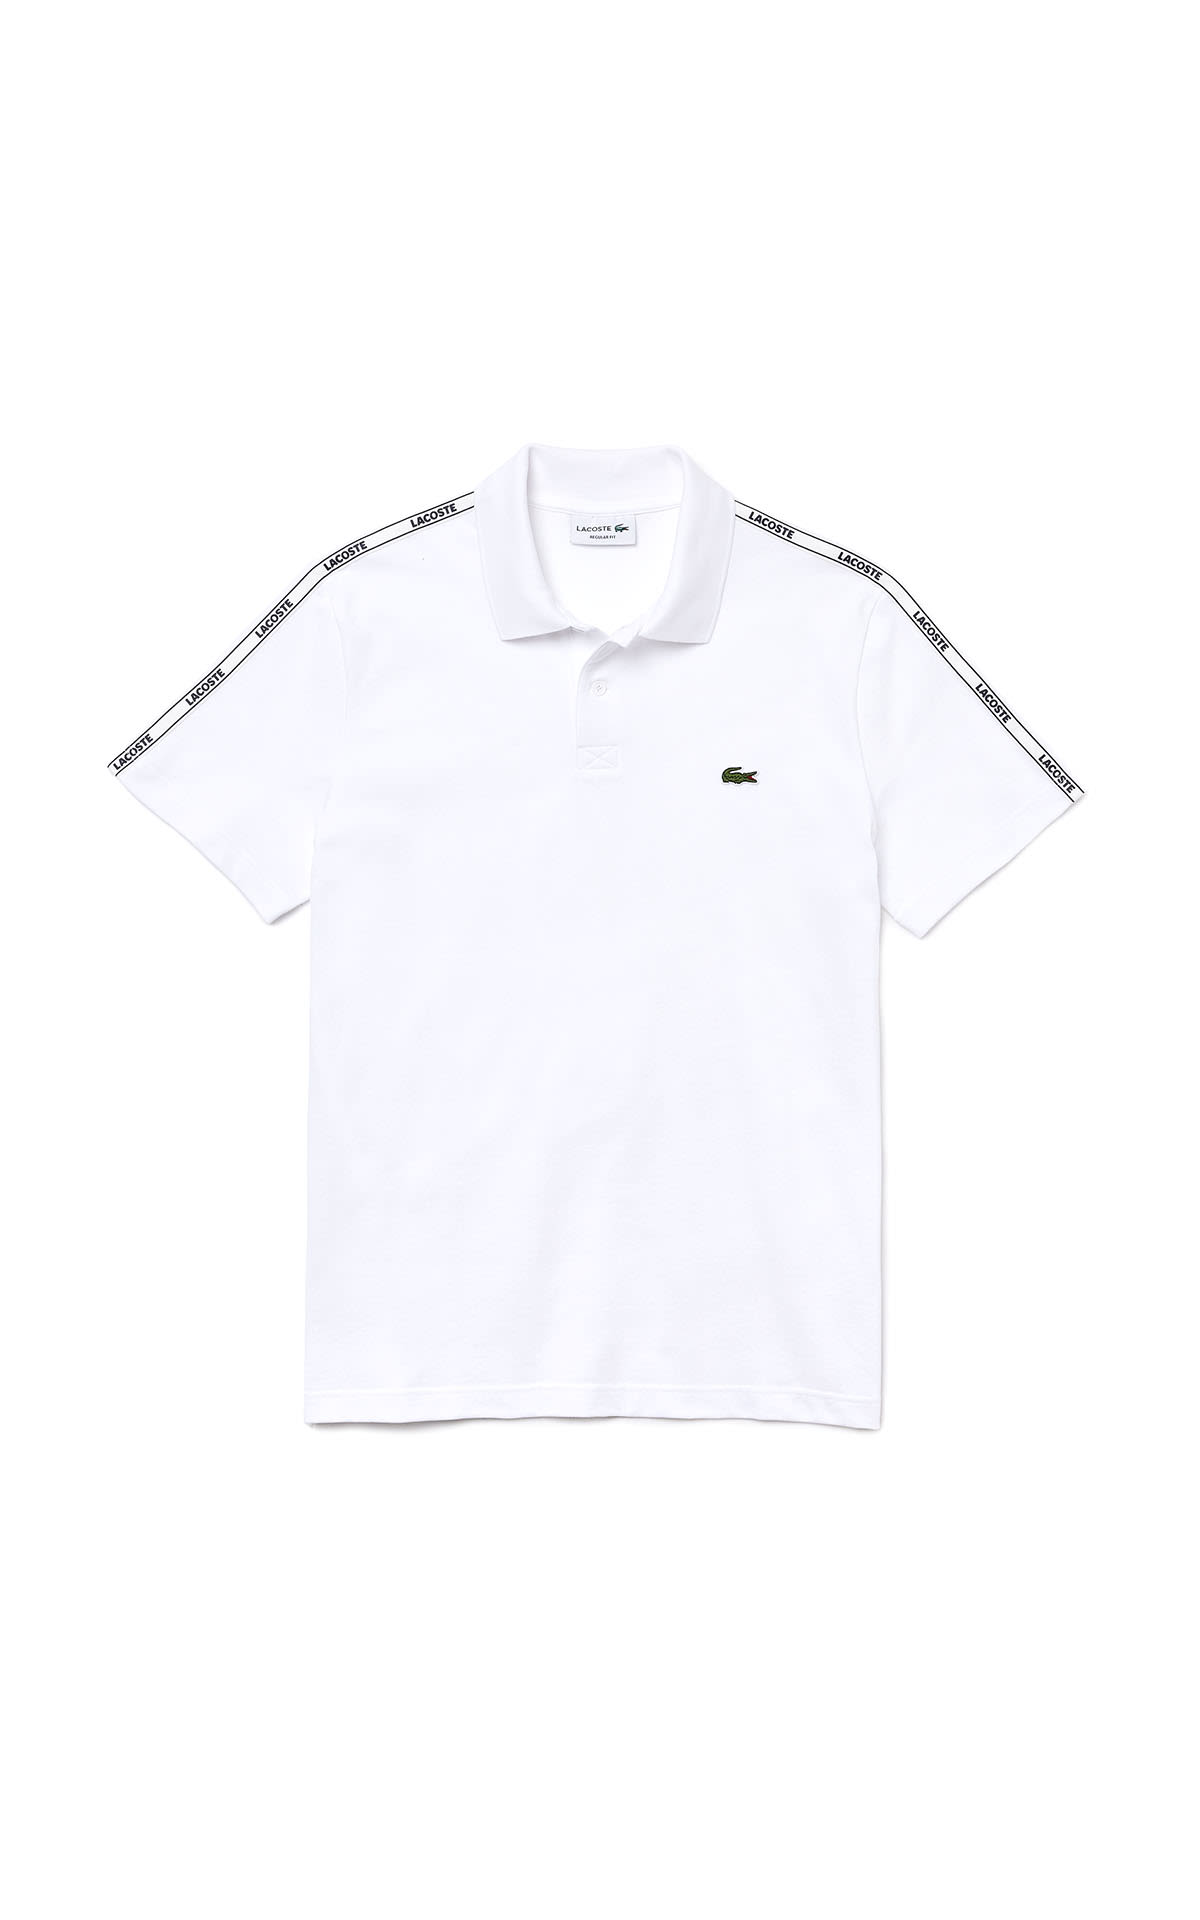 White t-shirt lacoste 